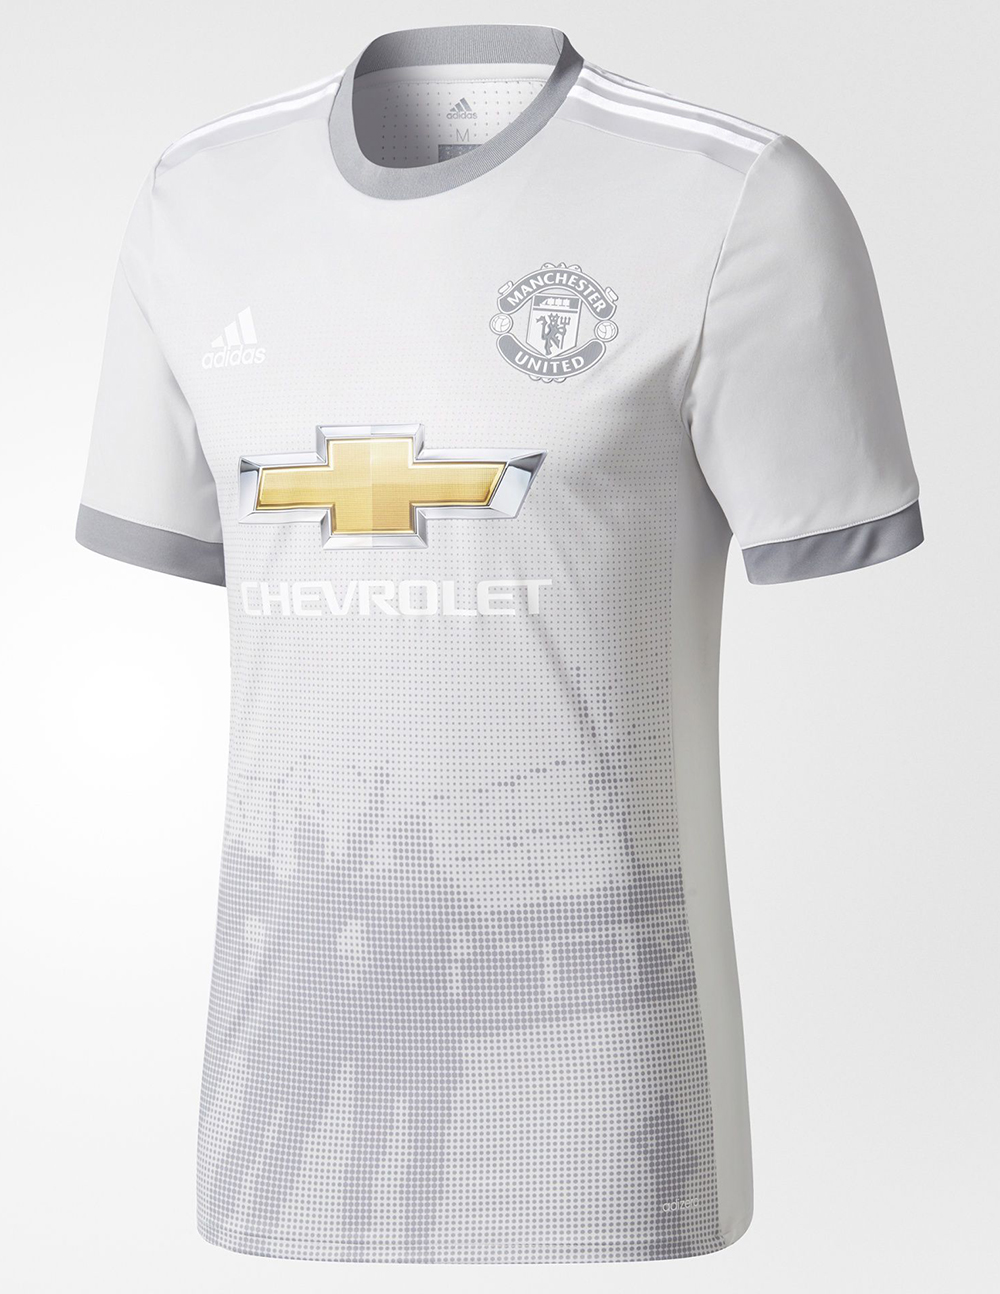 Manchester United adidas Third Kit 2017 18